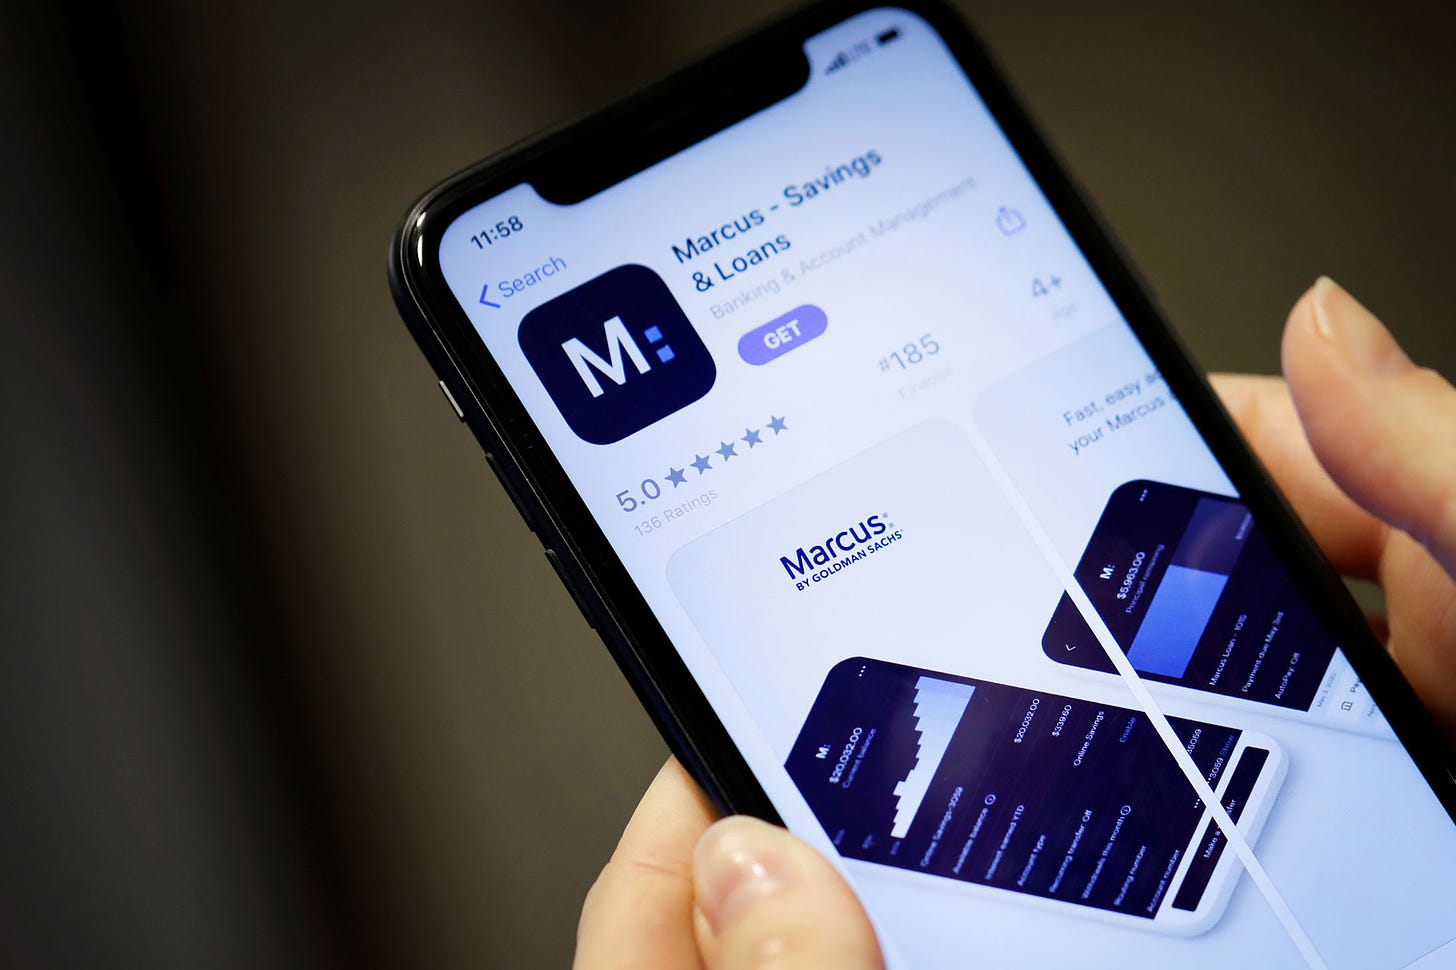 Goldman Sachs launches Marcus mobile app